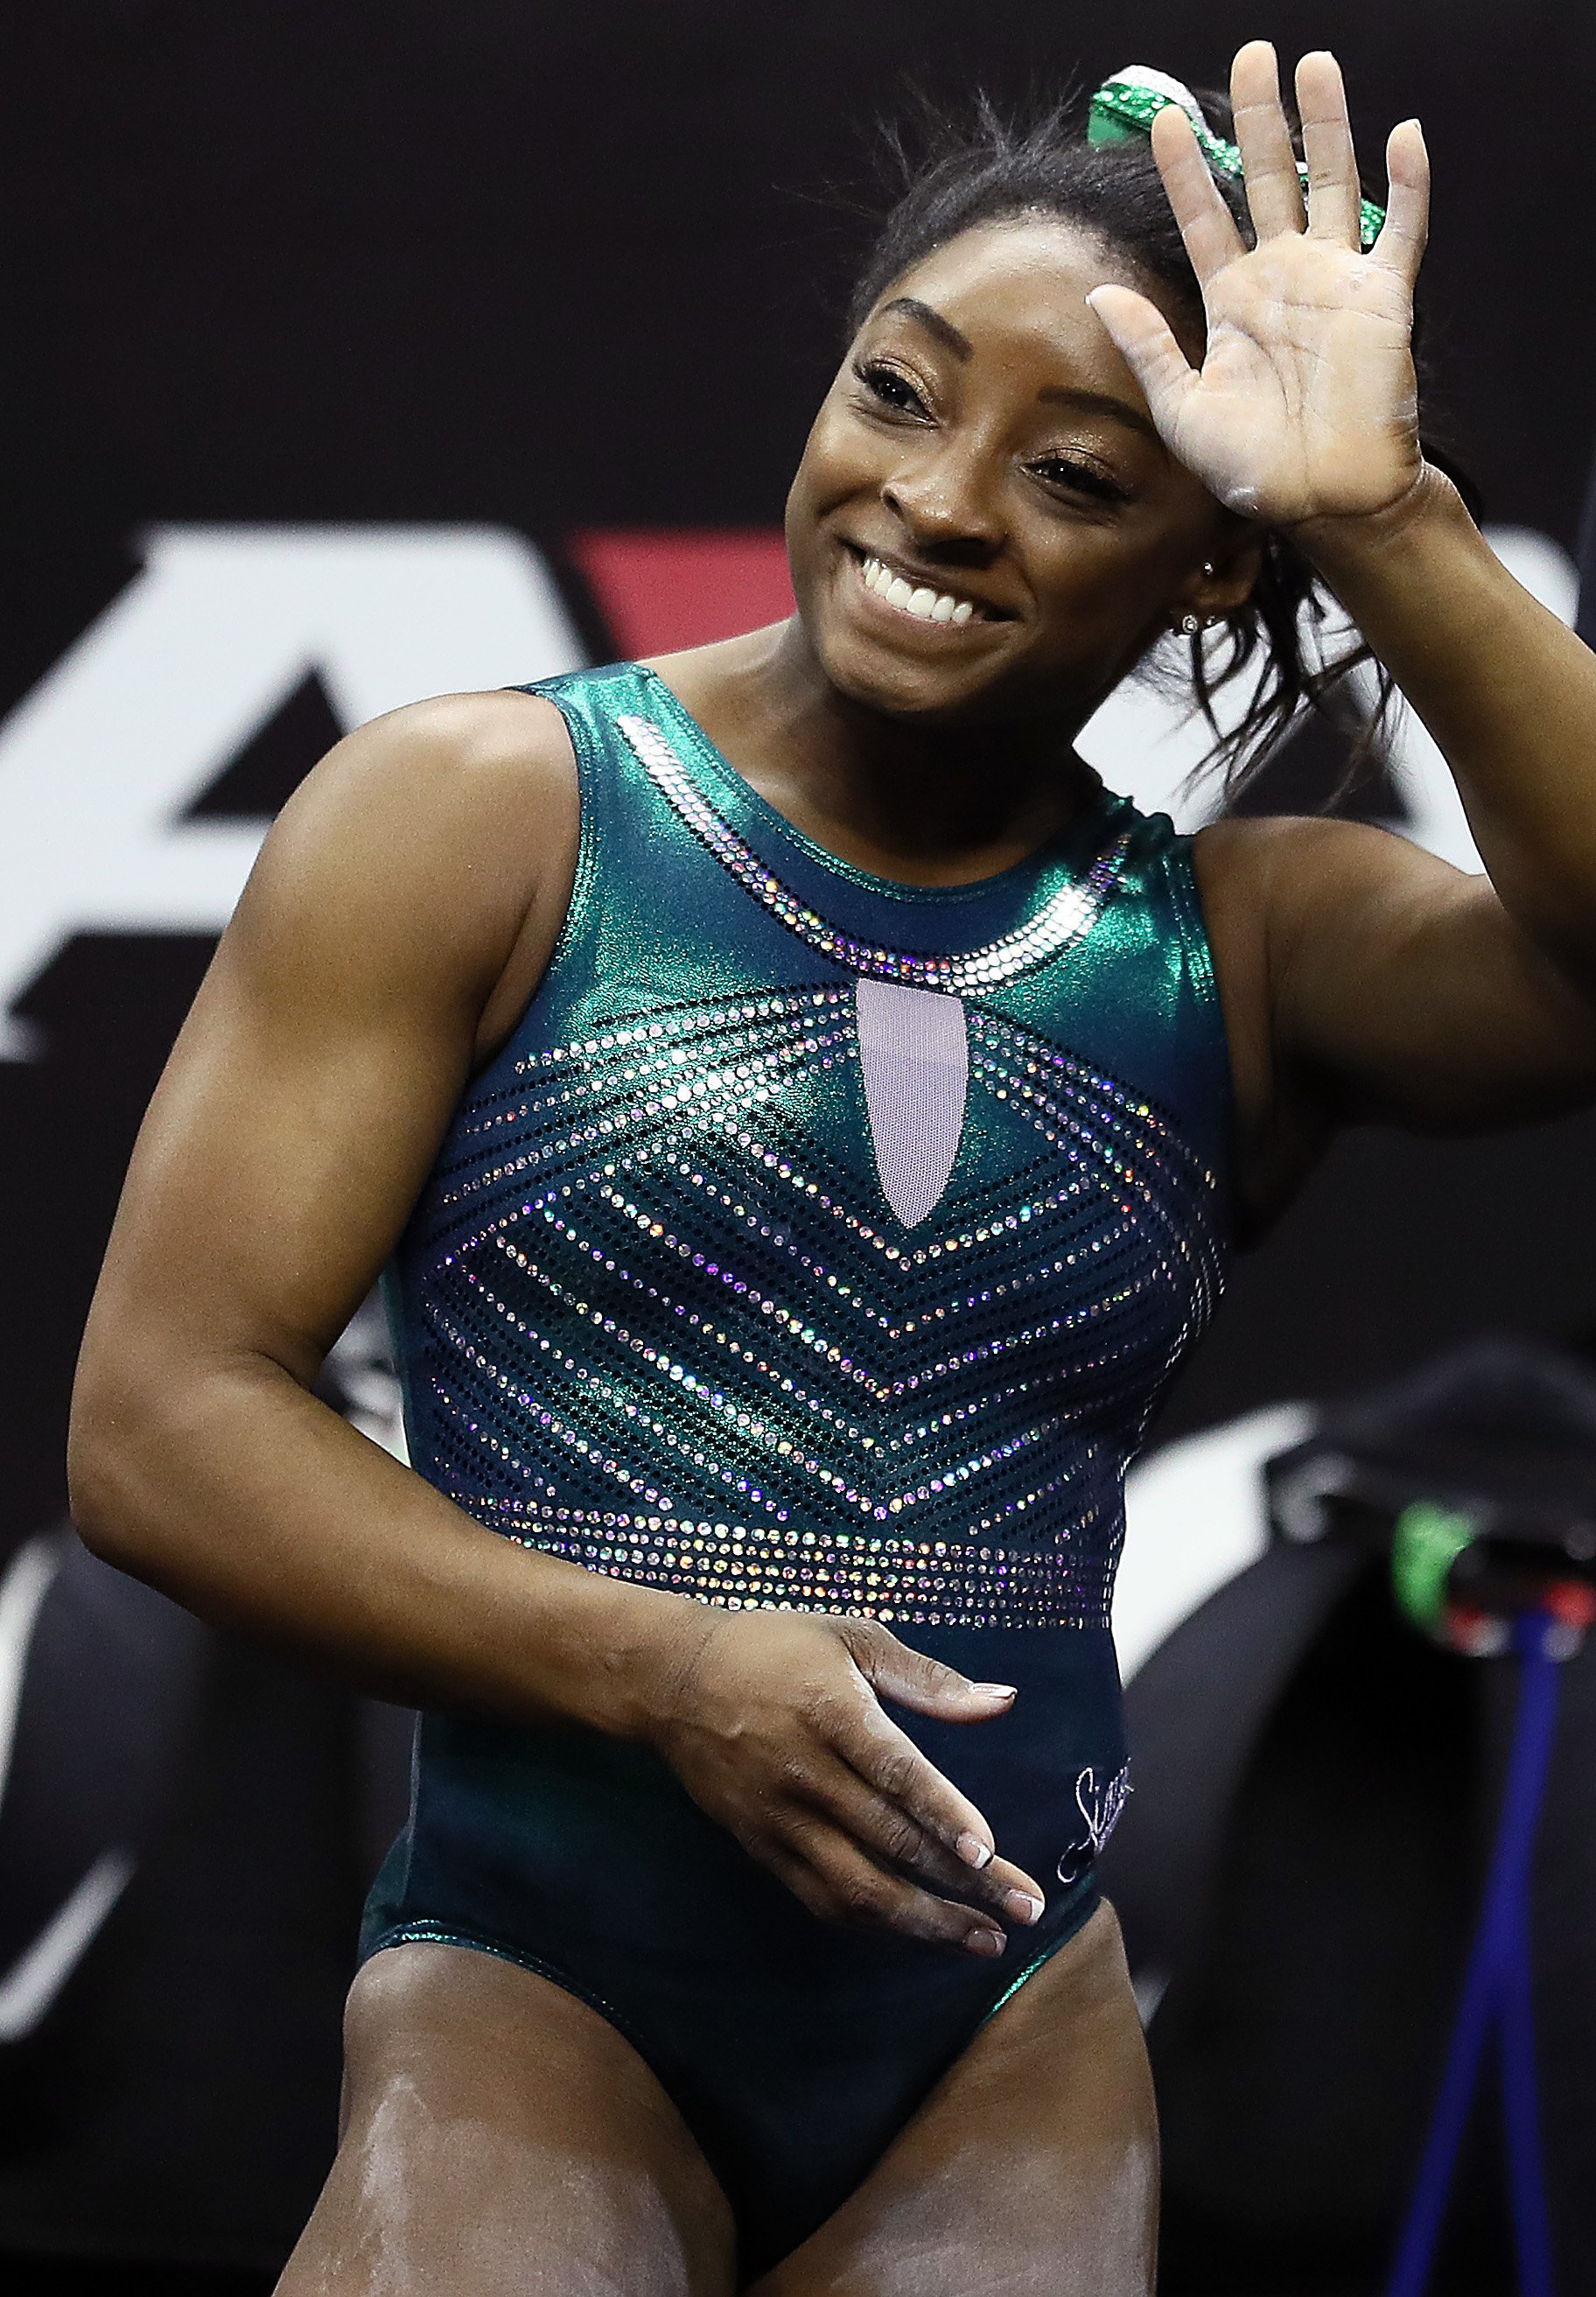 Simone Biles at the 2019 U.S. Gymnastics Championships in Kansas City, Missouri on Aug. 9, 2019 | Photo: Getty Images